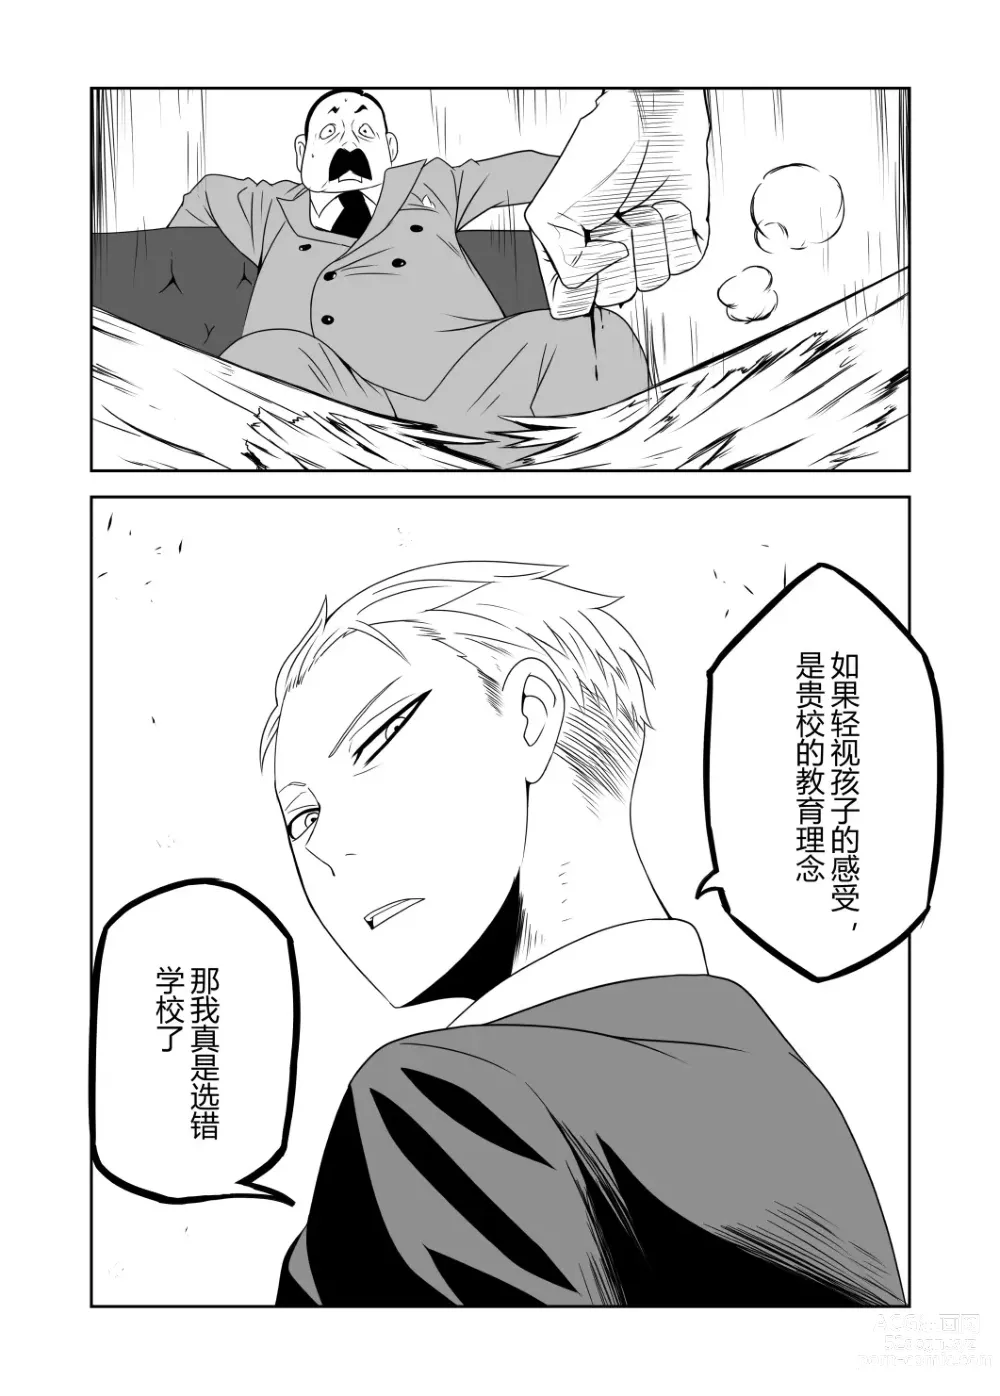 Page 2 of doujinshi 间谍过家家